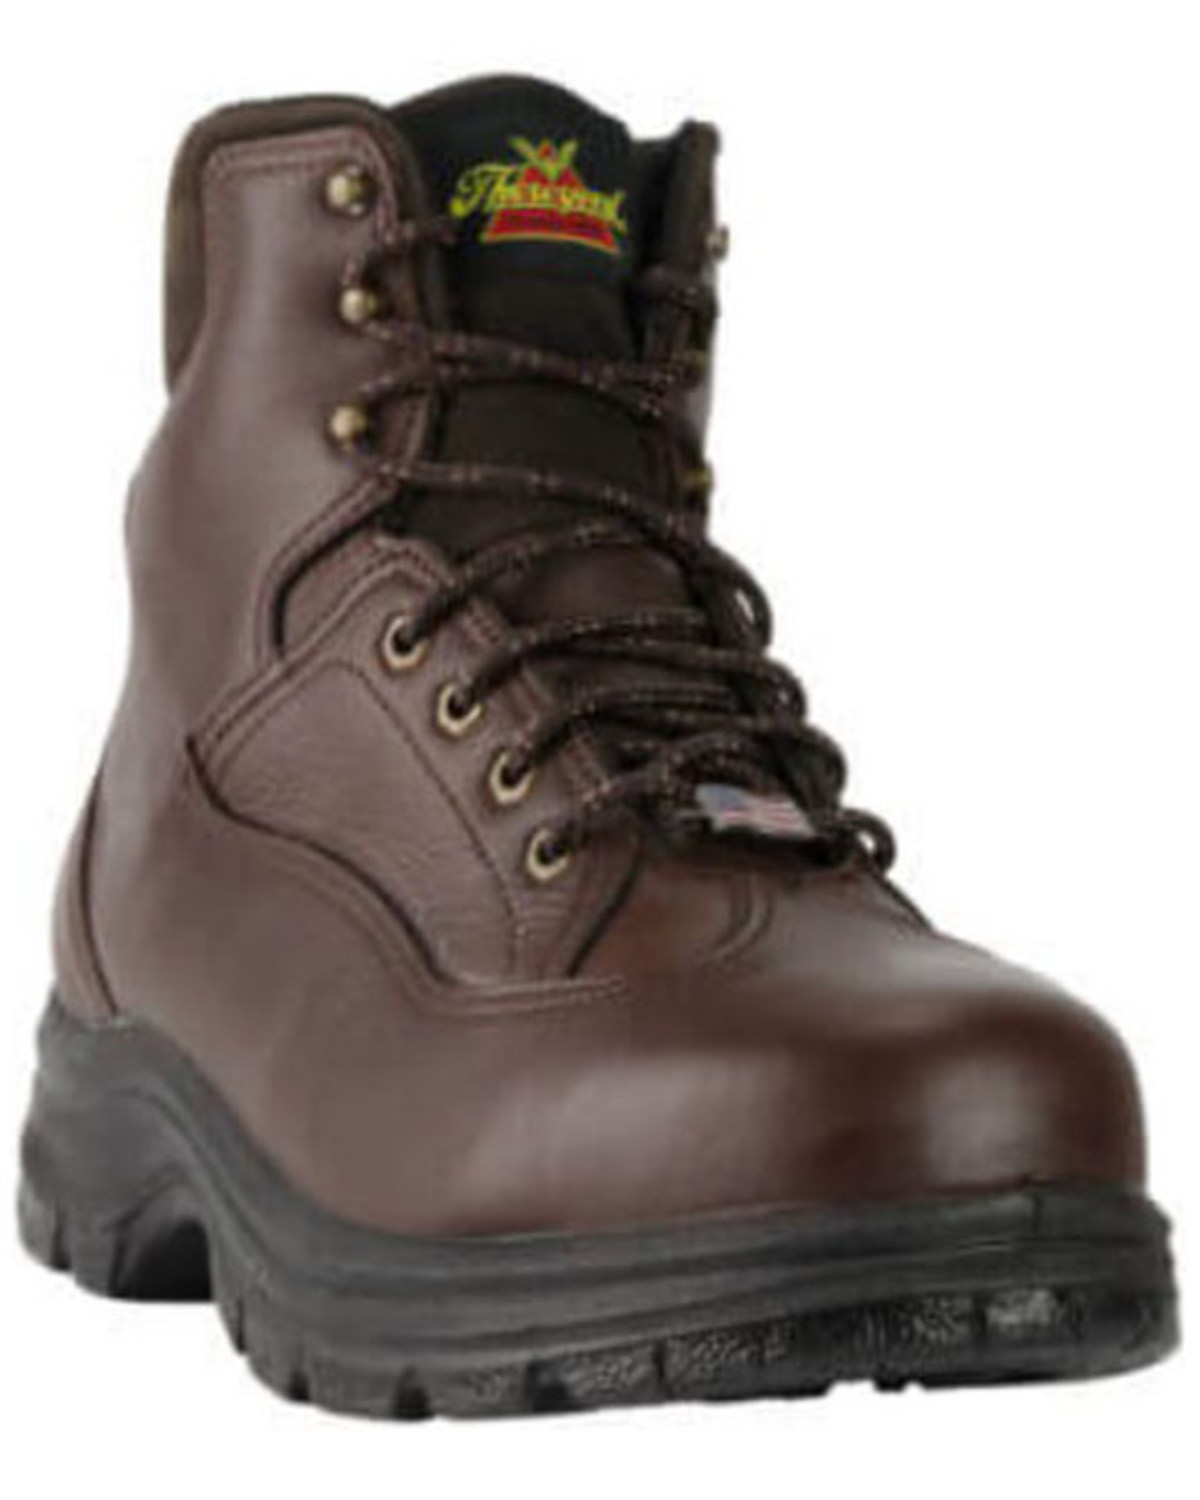 Thorogood Men's Signature Series Work Boots - Steel Toe